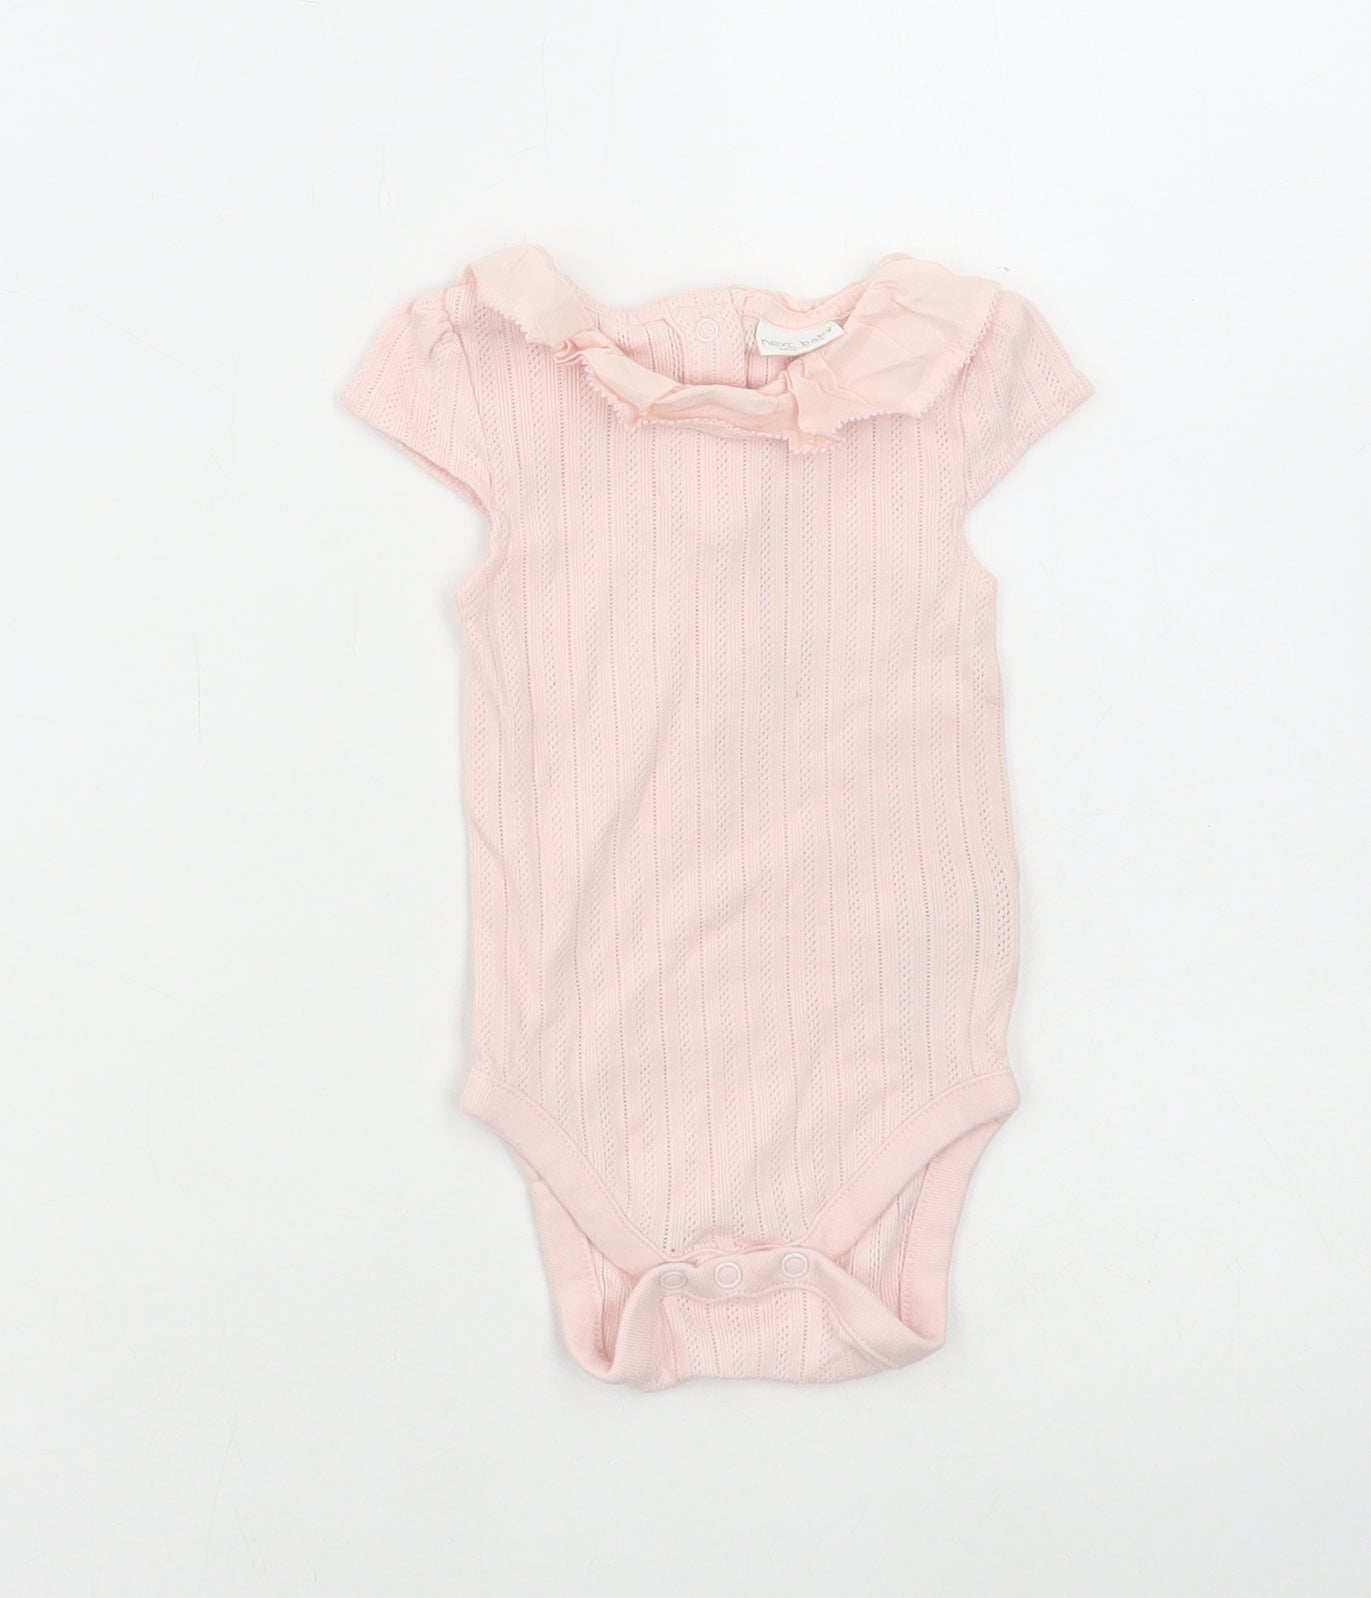 NEXT Girls Pink Cotton Bodysuit Outfit/Set Size 6-9 Months Snap